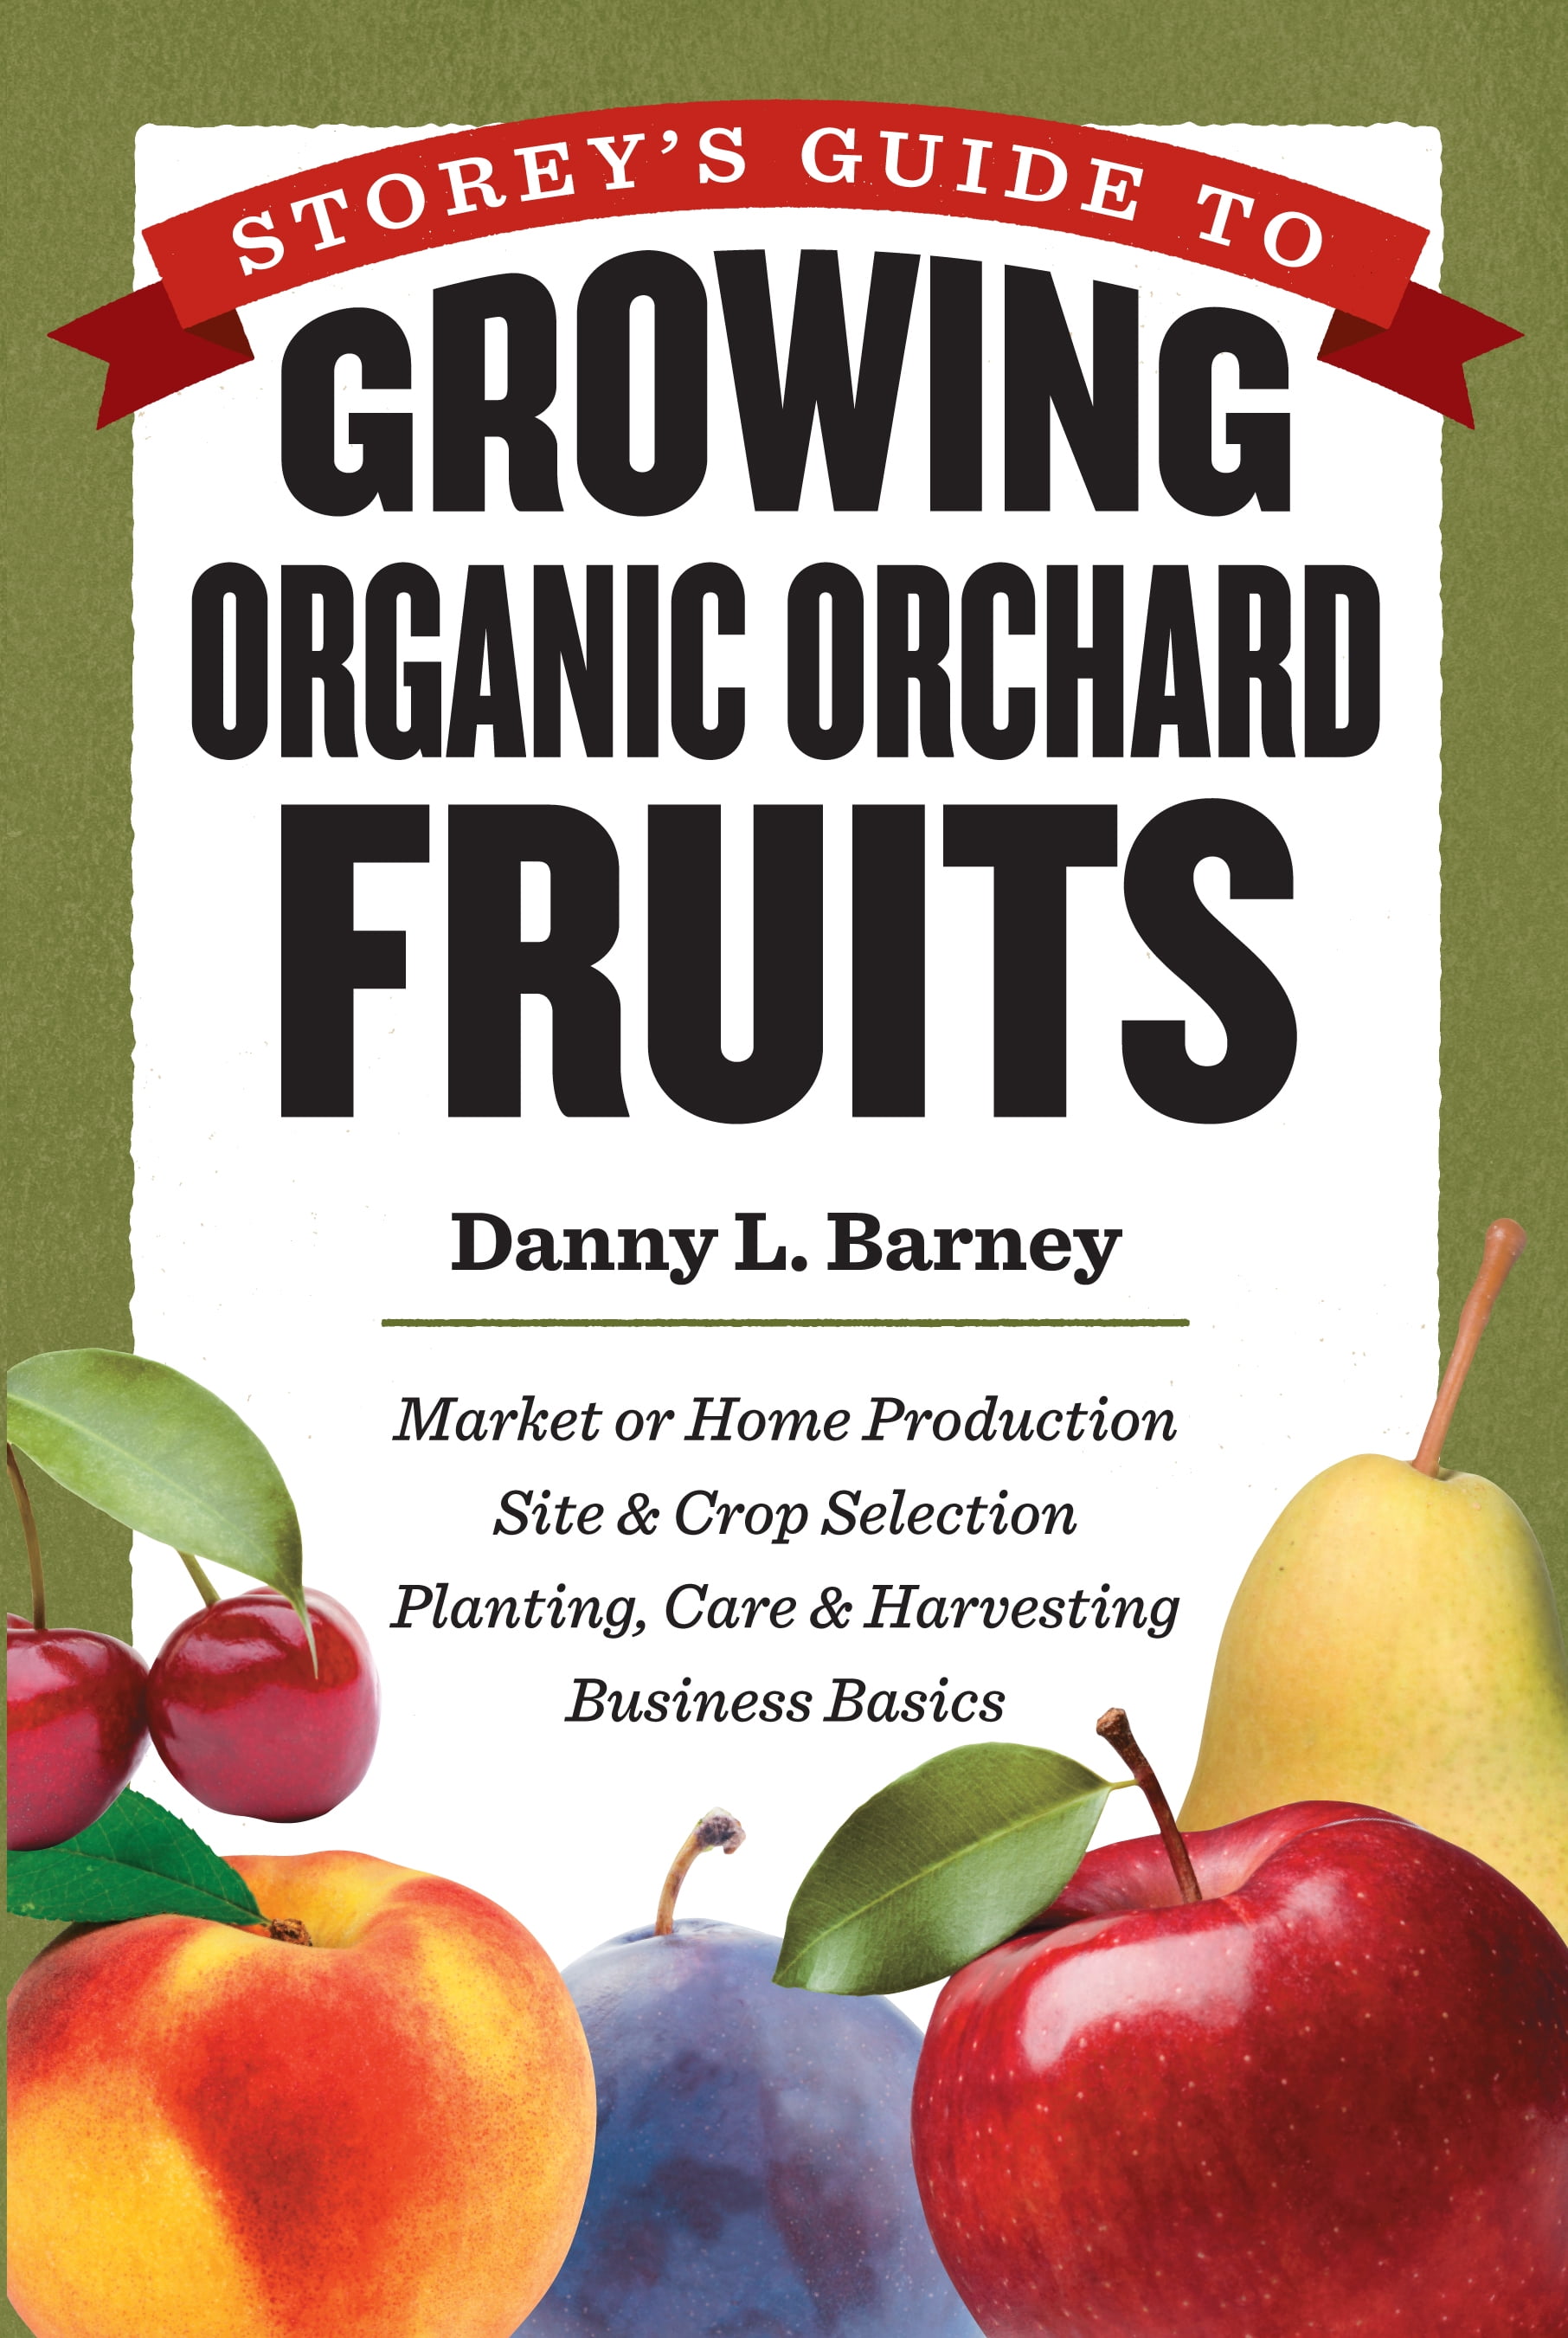 Grow stories. Danny Barney. Growing stories. Grand Regional Orchards фрукты поставщик. Market products.